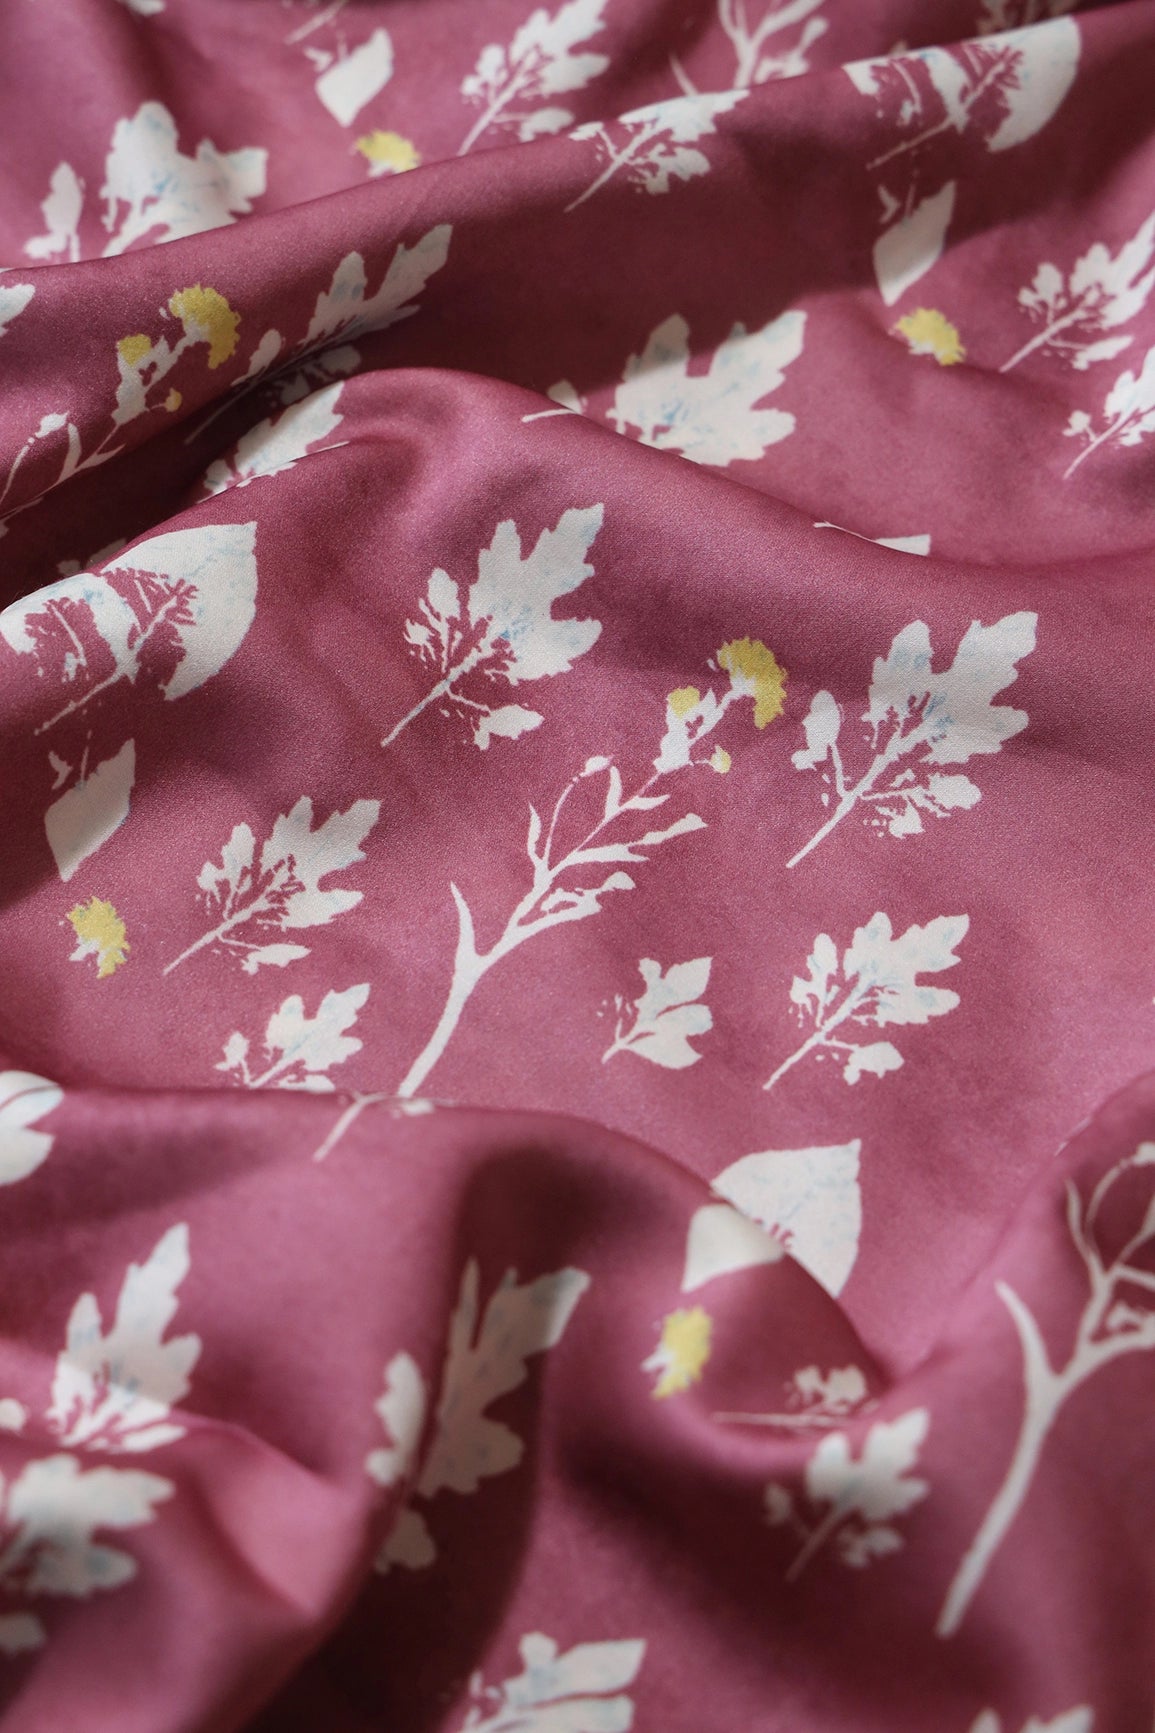 Floral Motif Digital Print Design On Dusty Rose Pink Linen Satin Fabric